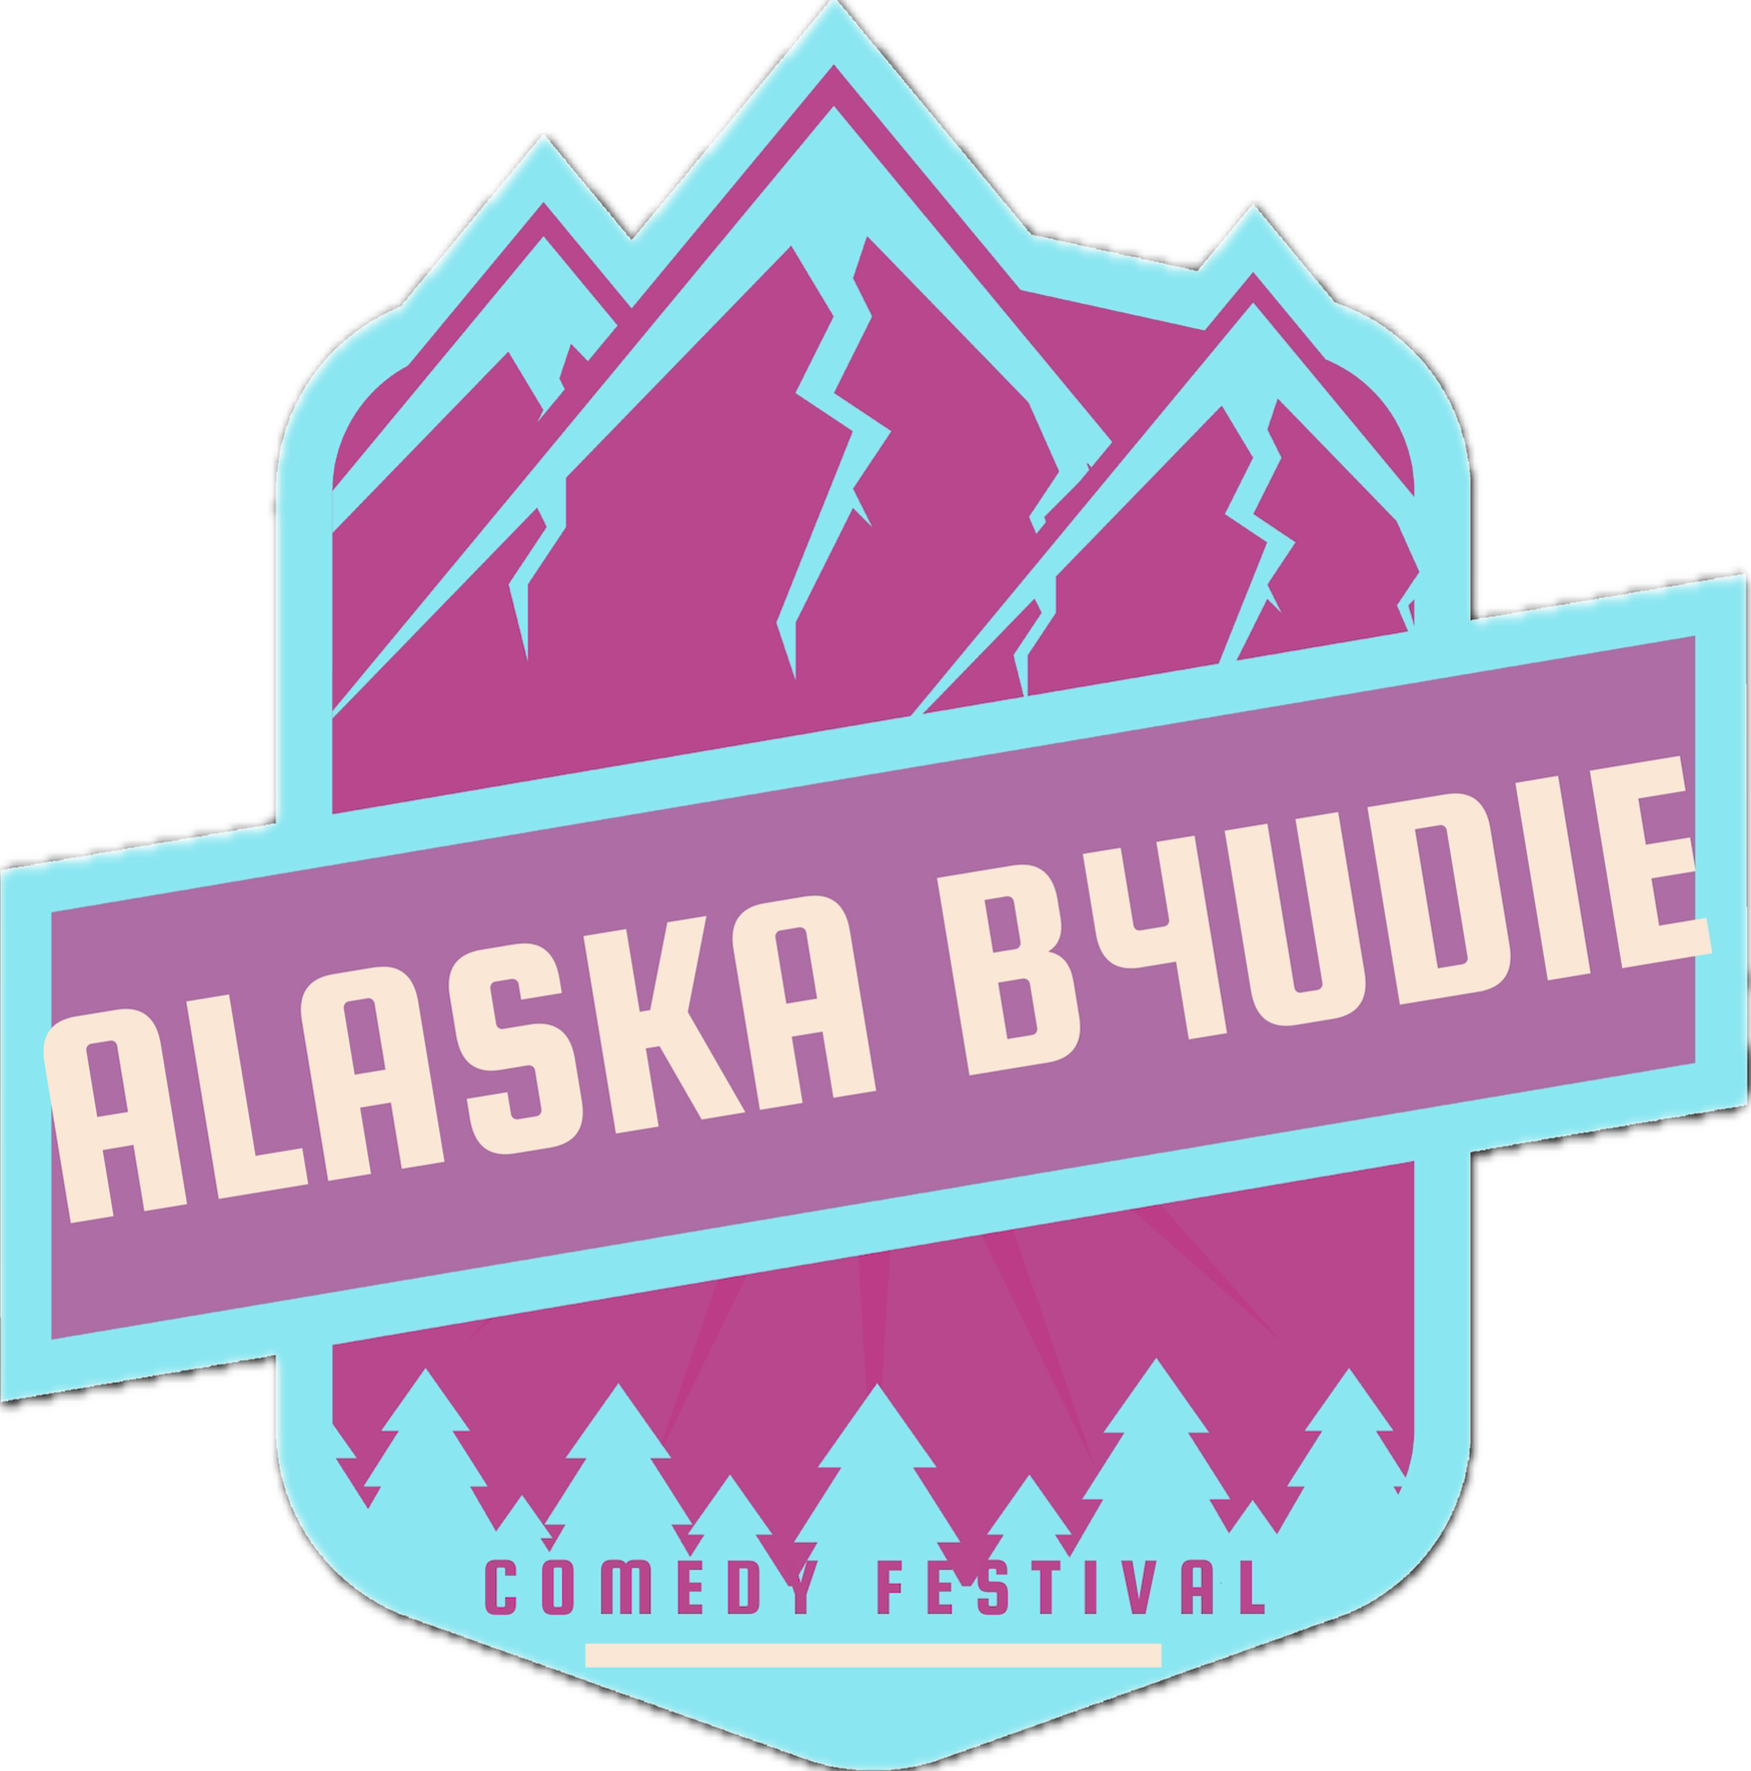 Alaska B4UDie Comedy Festival